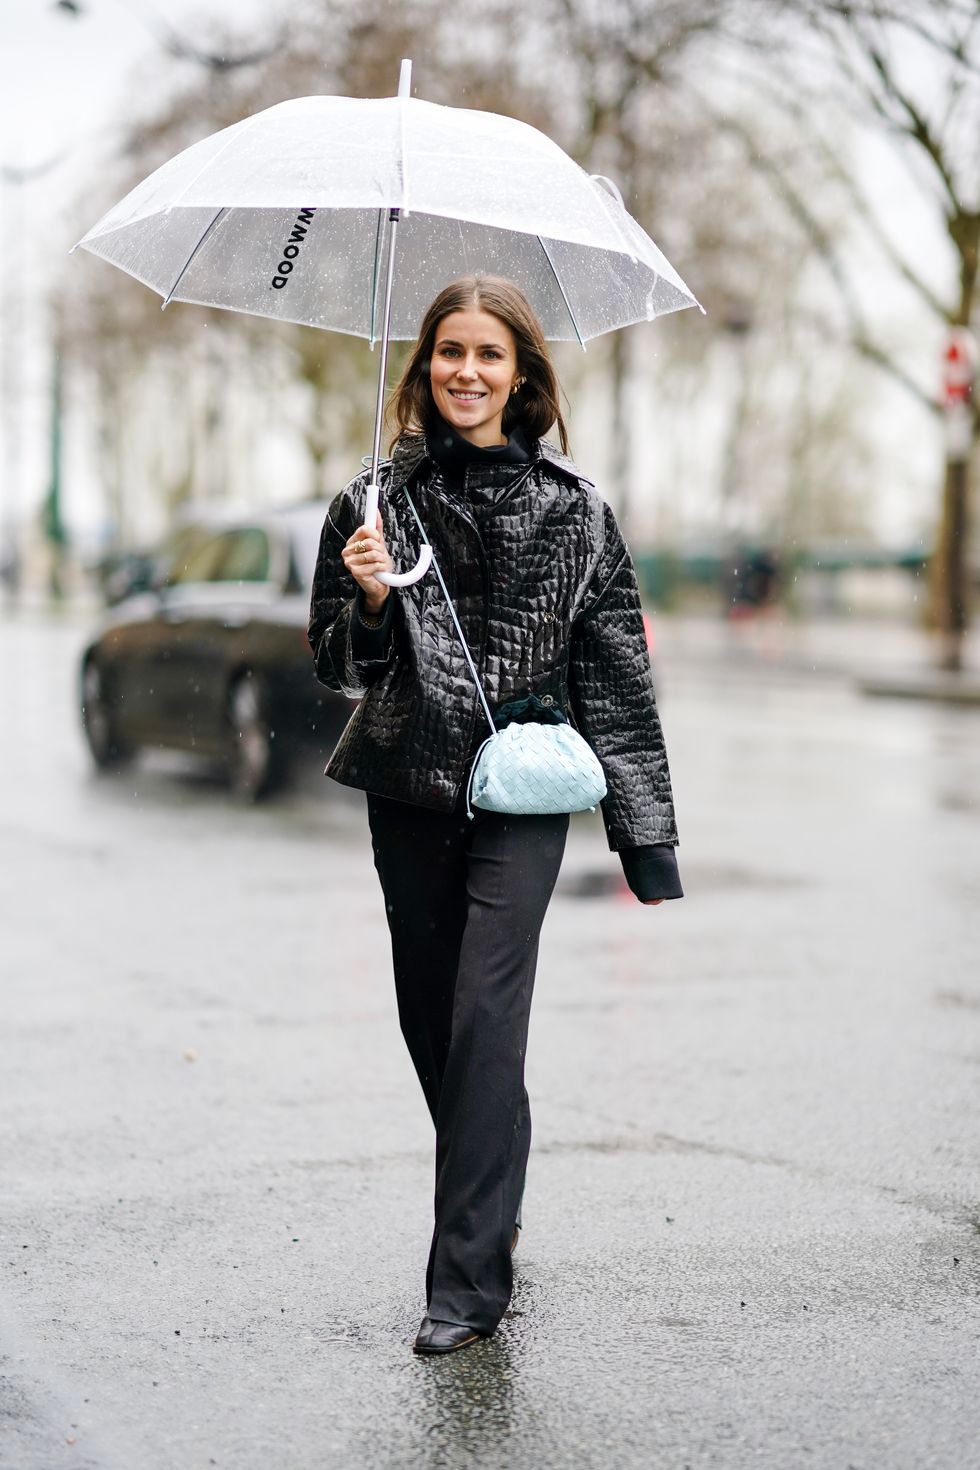 los mejores looks para dias de lluvia el paraguas transparente